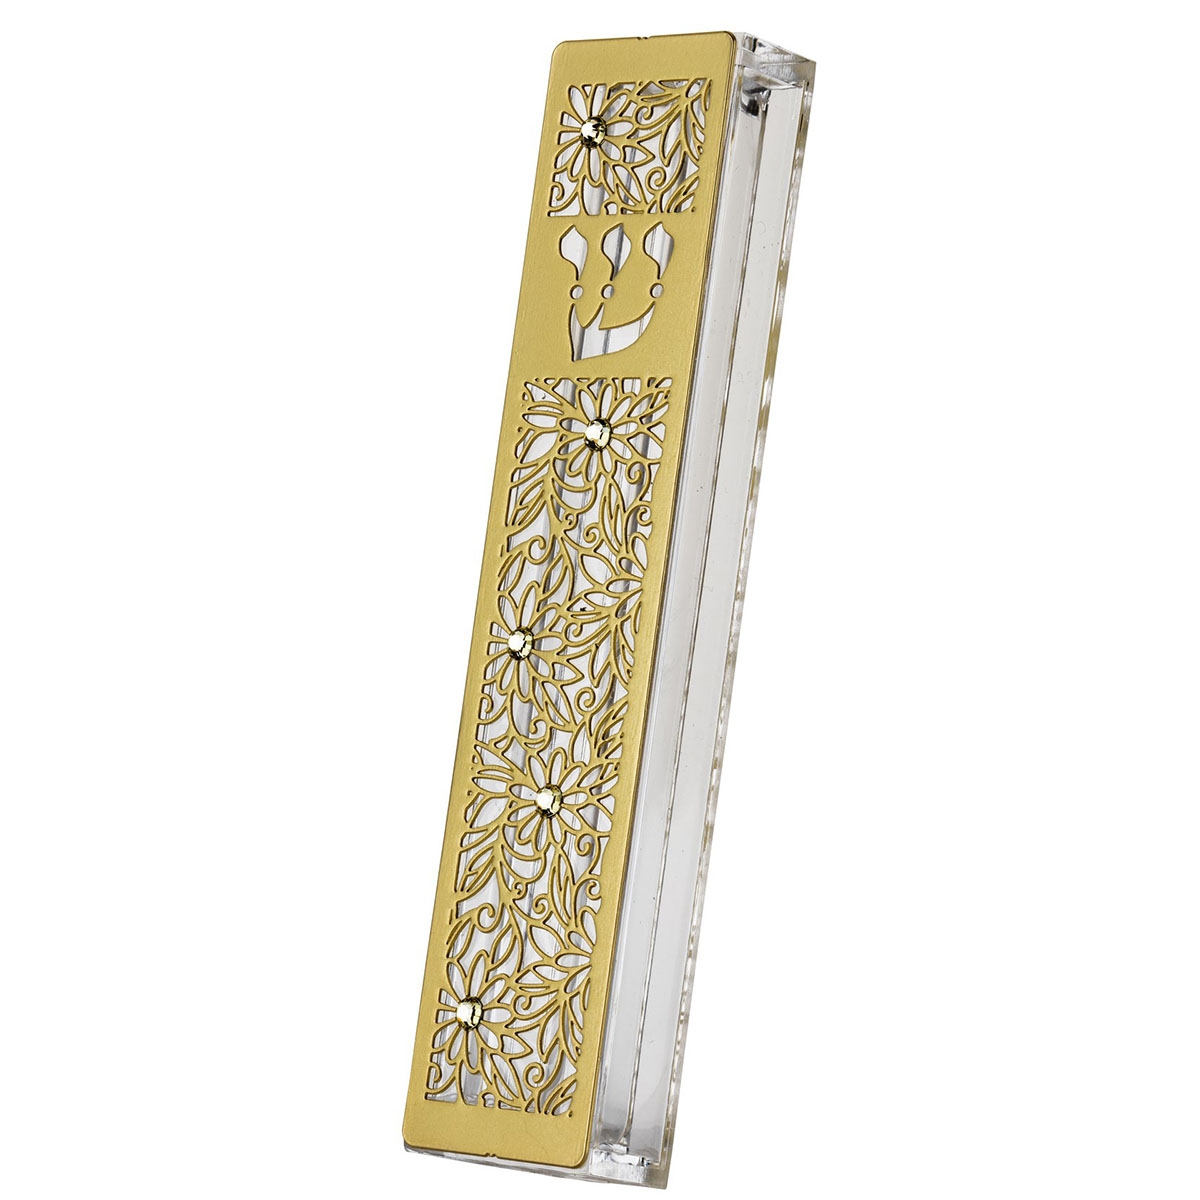 Dorit Judaica Gold-Plated Acrylic Mezuzah Case With Floral Motif - 1